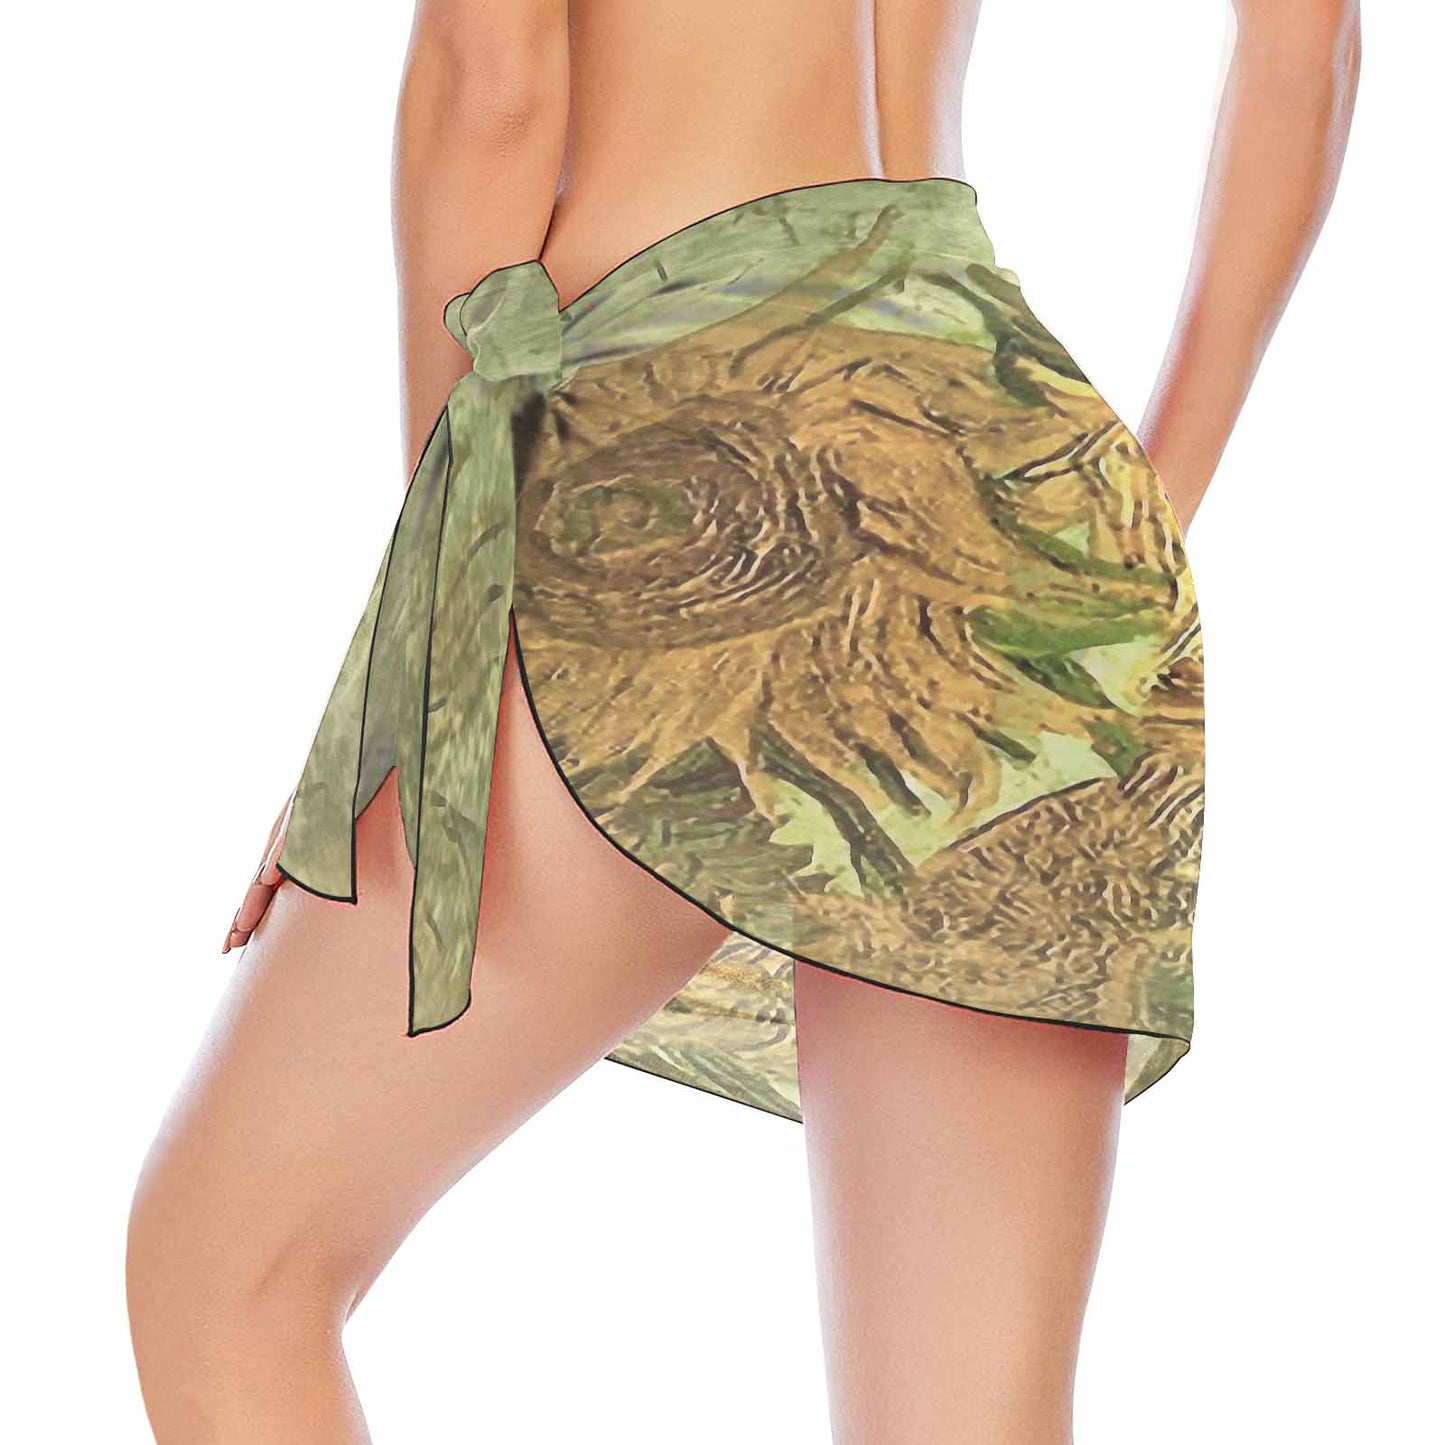 Vintage floral, beach sarong, beach coverup, swim wear, Design 48x